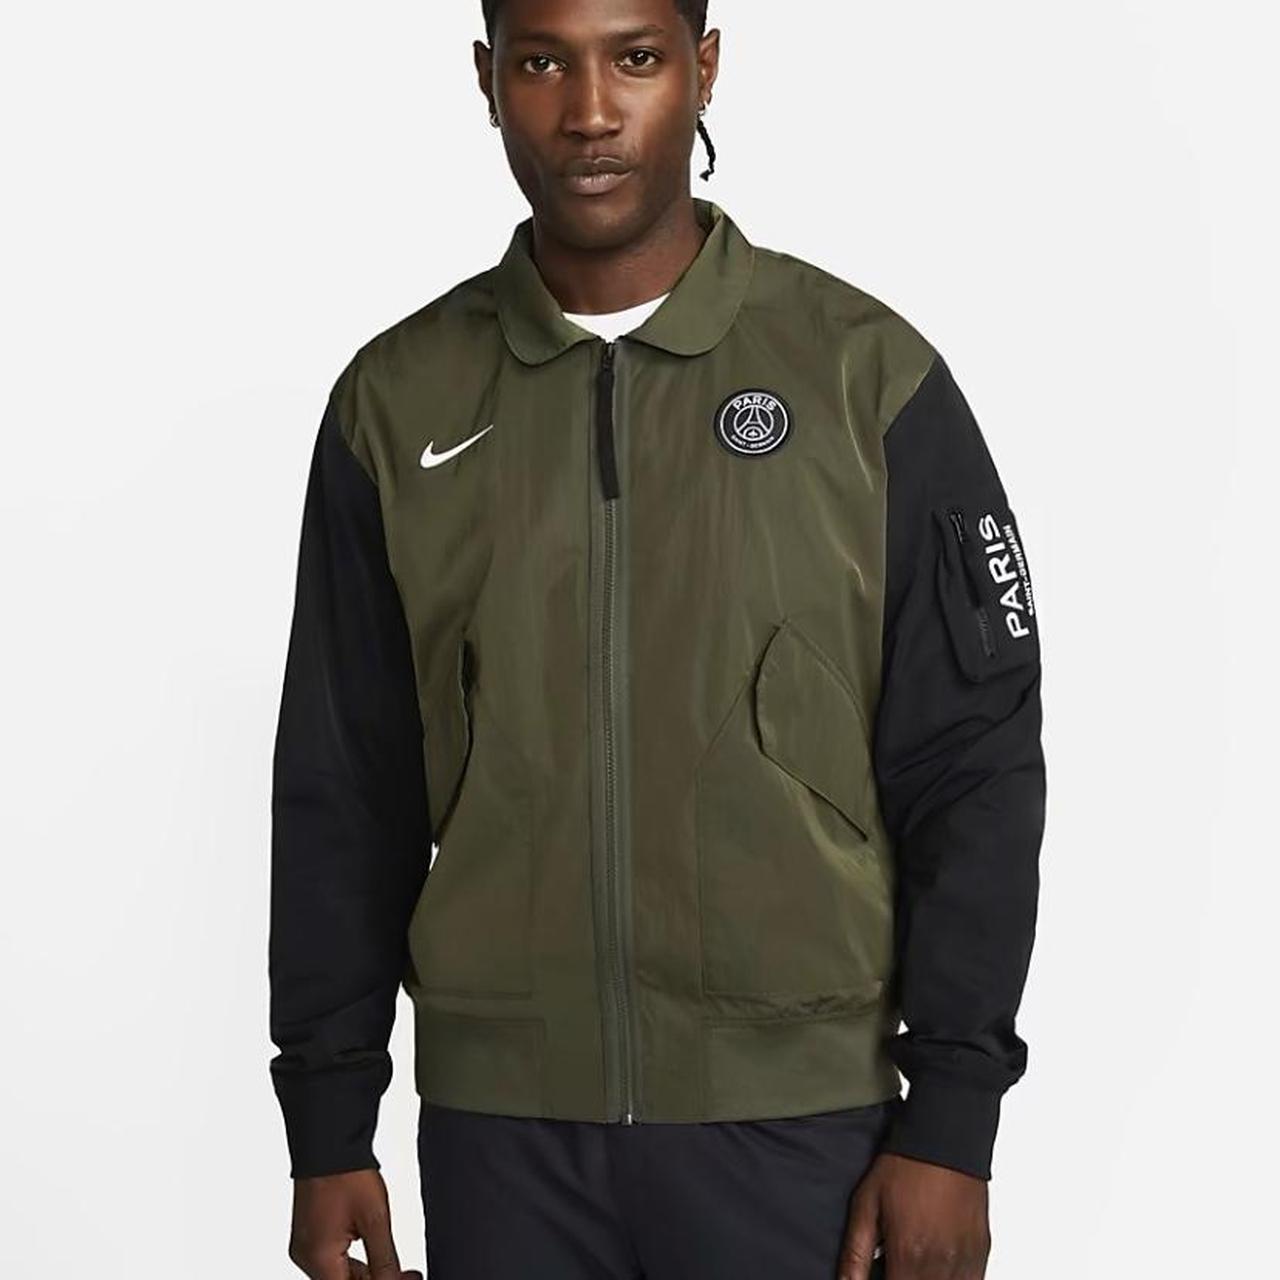 PSG bomber jacket Khaki Lightweight perfect for... - Depop